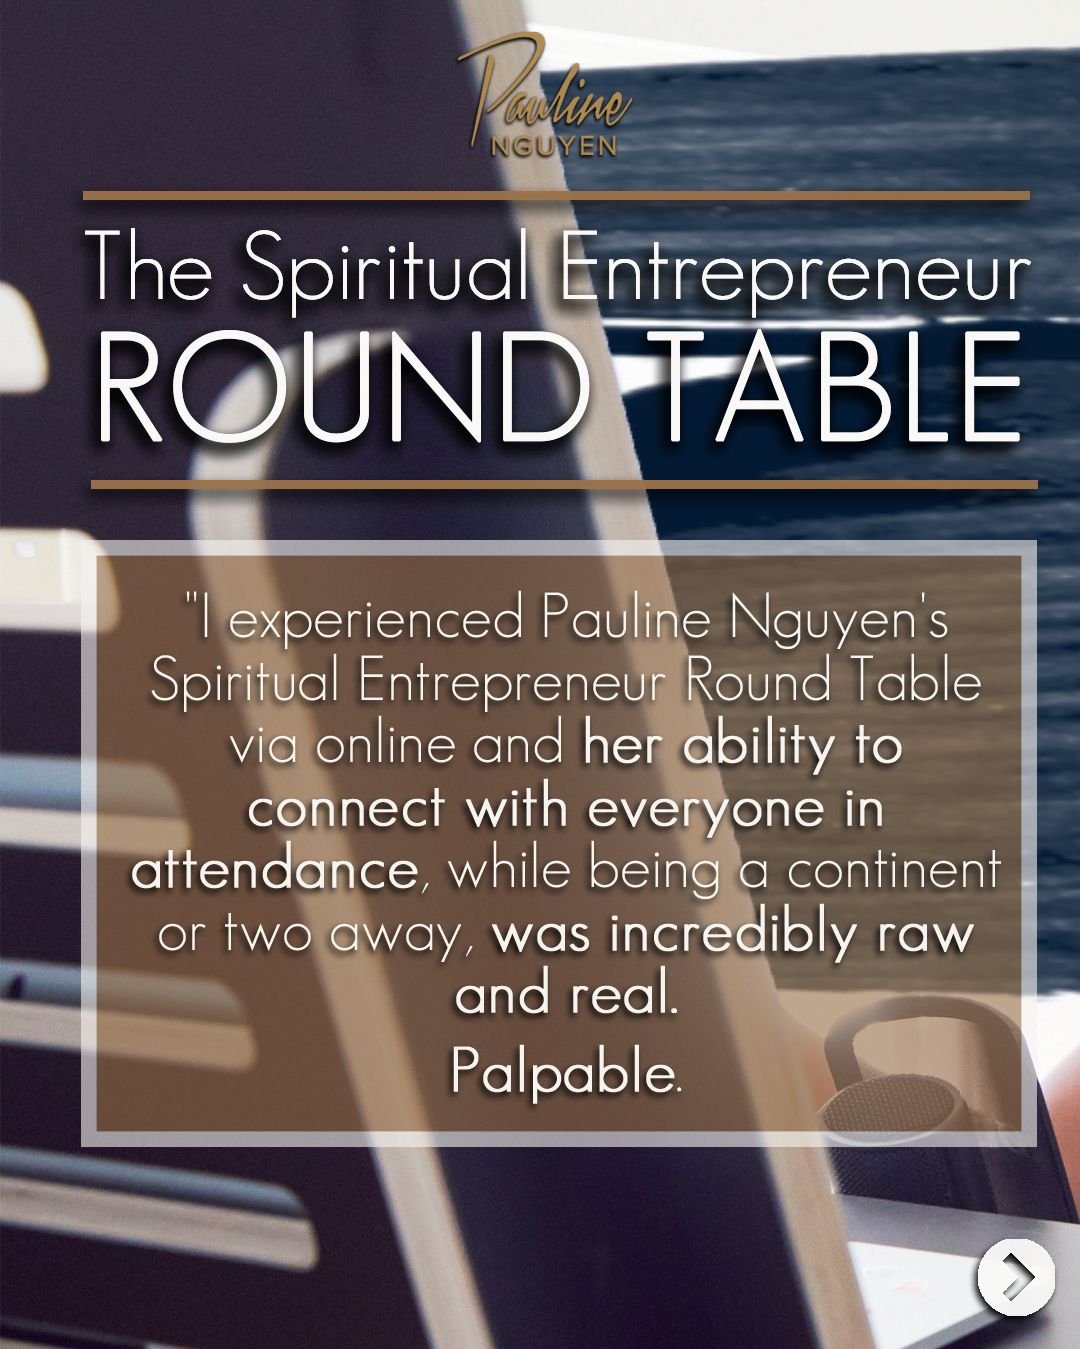 WHAT EXACTLY IS THE SPIRITUAL ENTREPRENEUR ROUND TABLE?